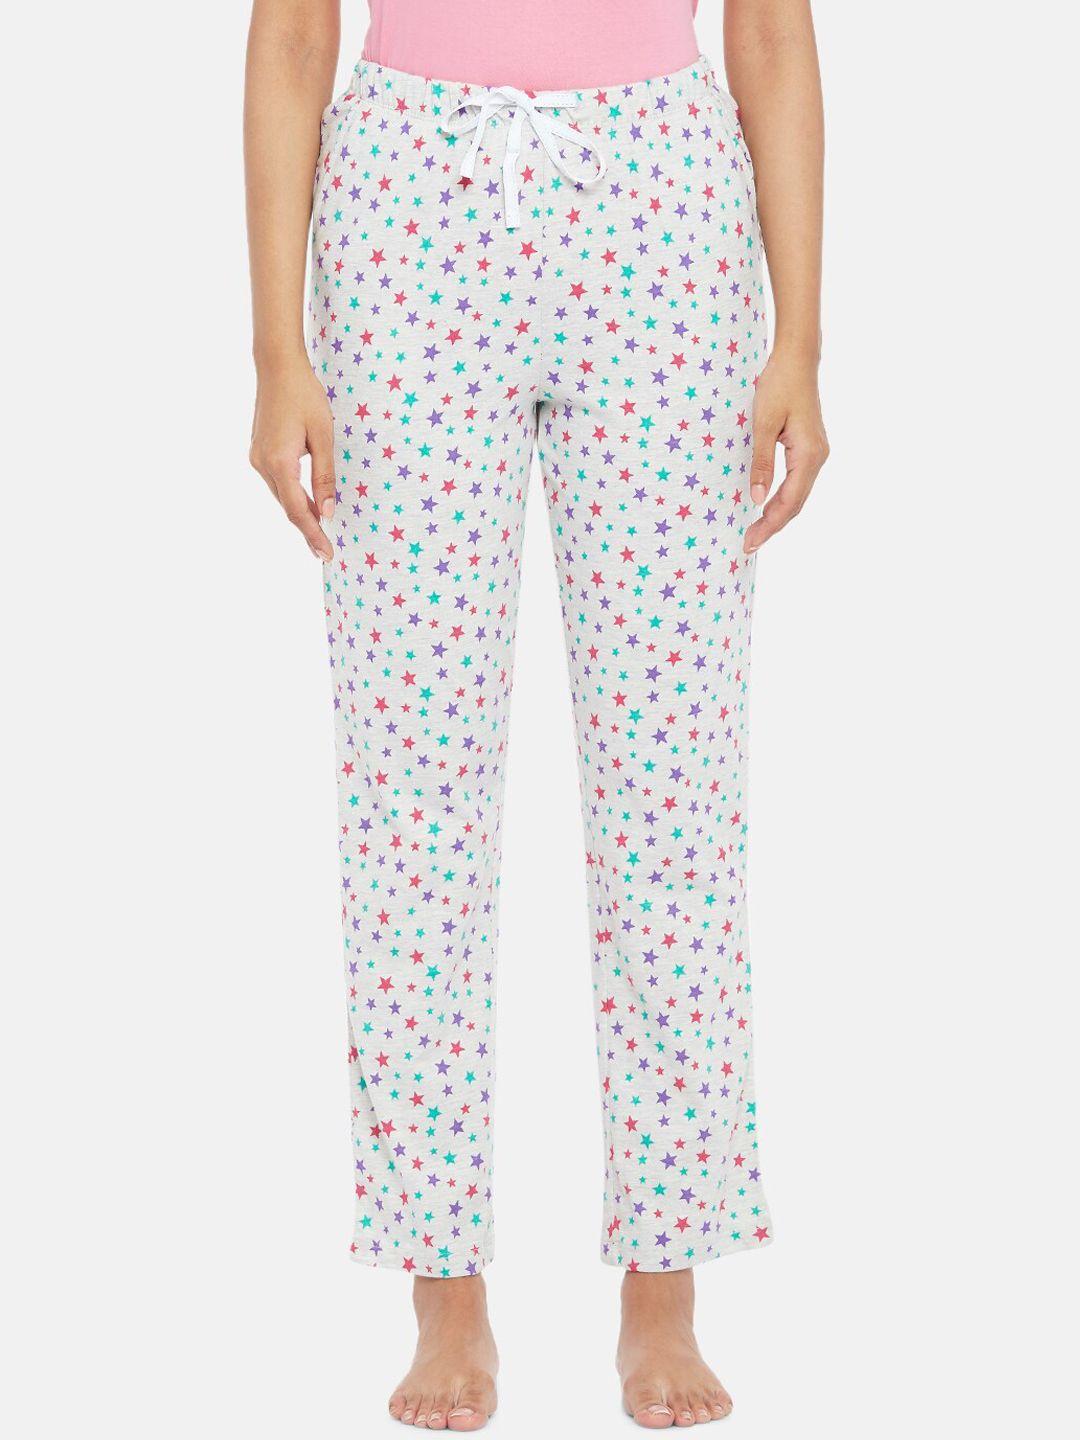 dreamz by pantaloons women grey melange printed pyjamas